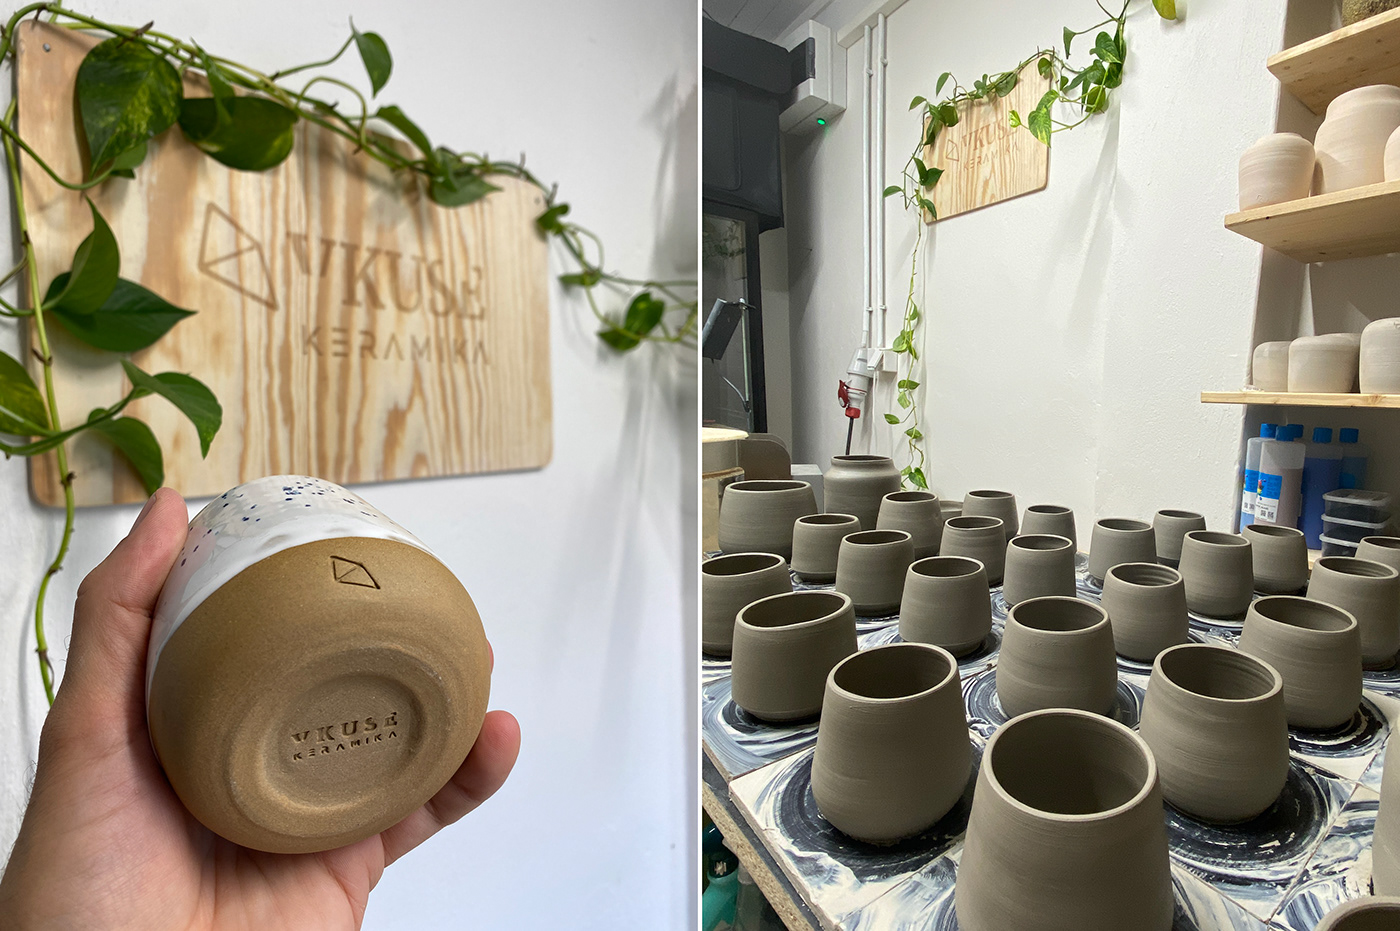 VKUSE - Keramika, Modern ceramics designed for your daily rituals
